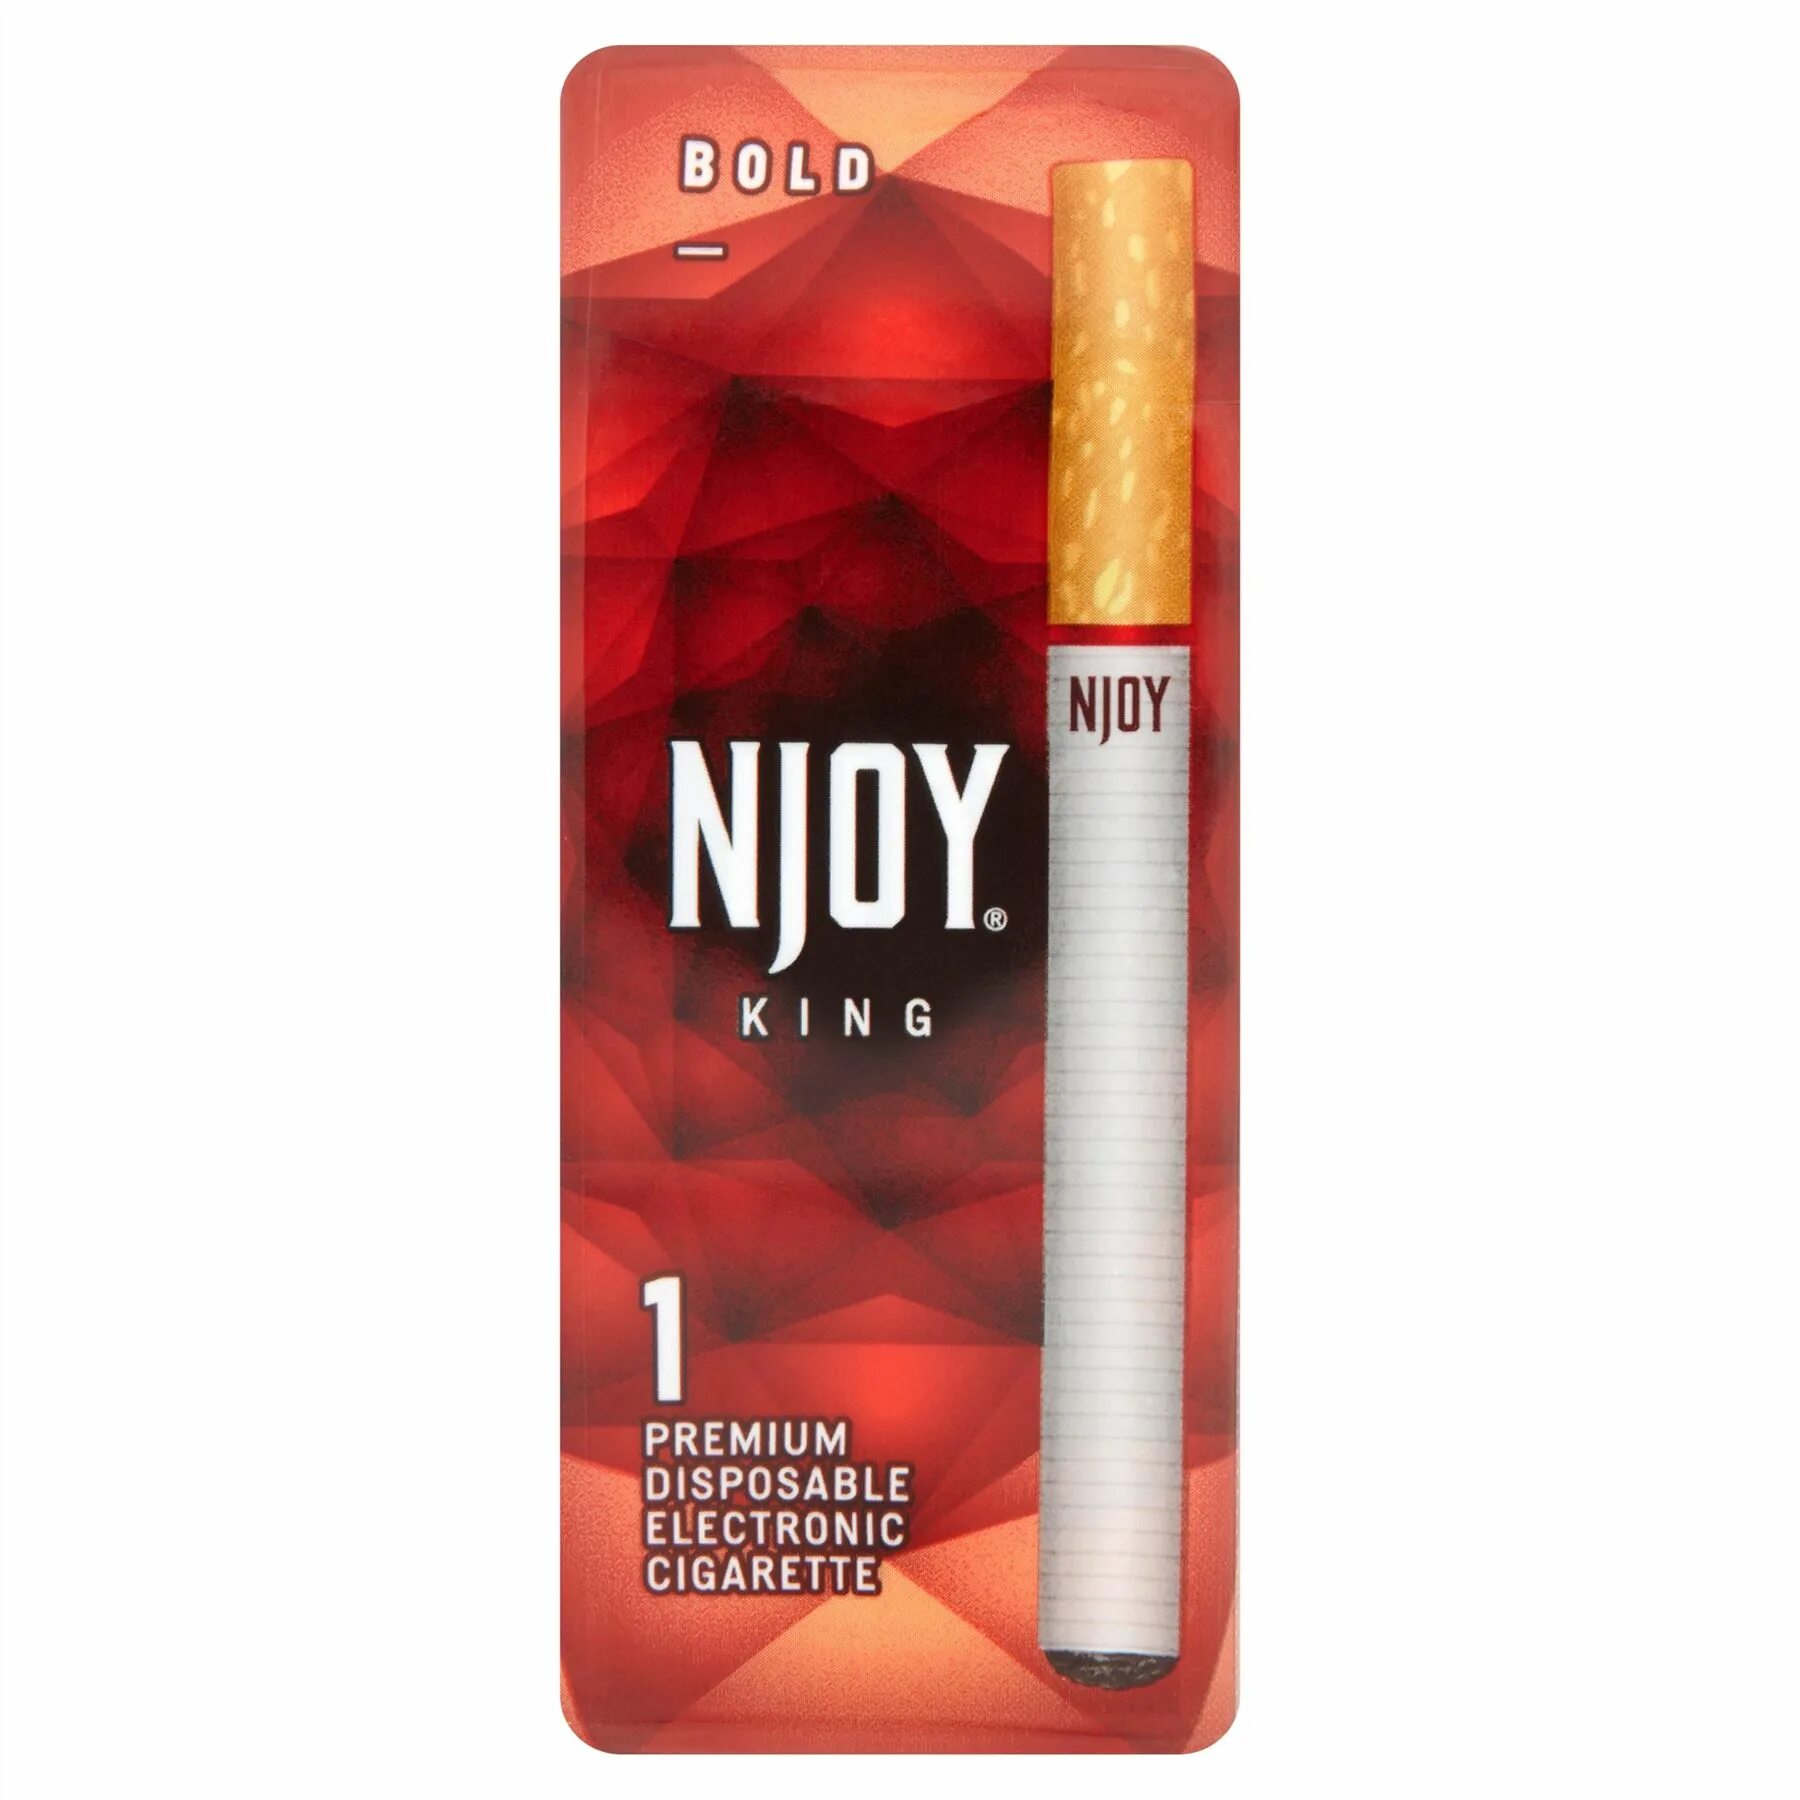 Одноразовые электронные сигареты NKD 100 Max. Электронная сигарета Omega 6000 одноразовая. Одноразовые электронные сигареты plana. Одноразовые электронные сигареты квадратные.